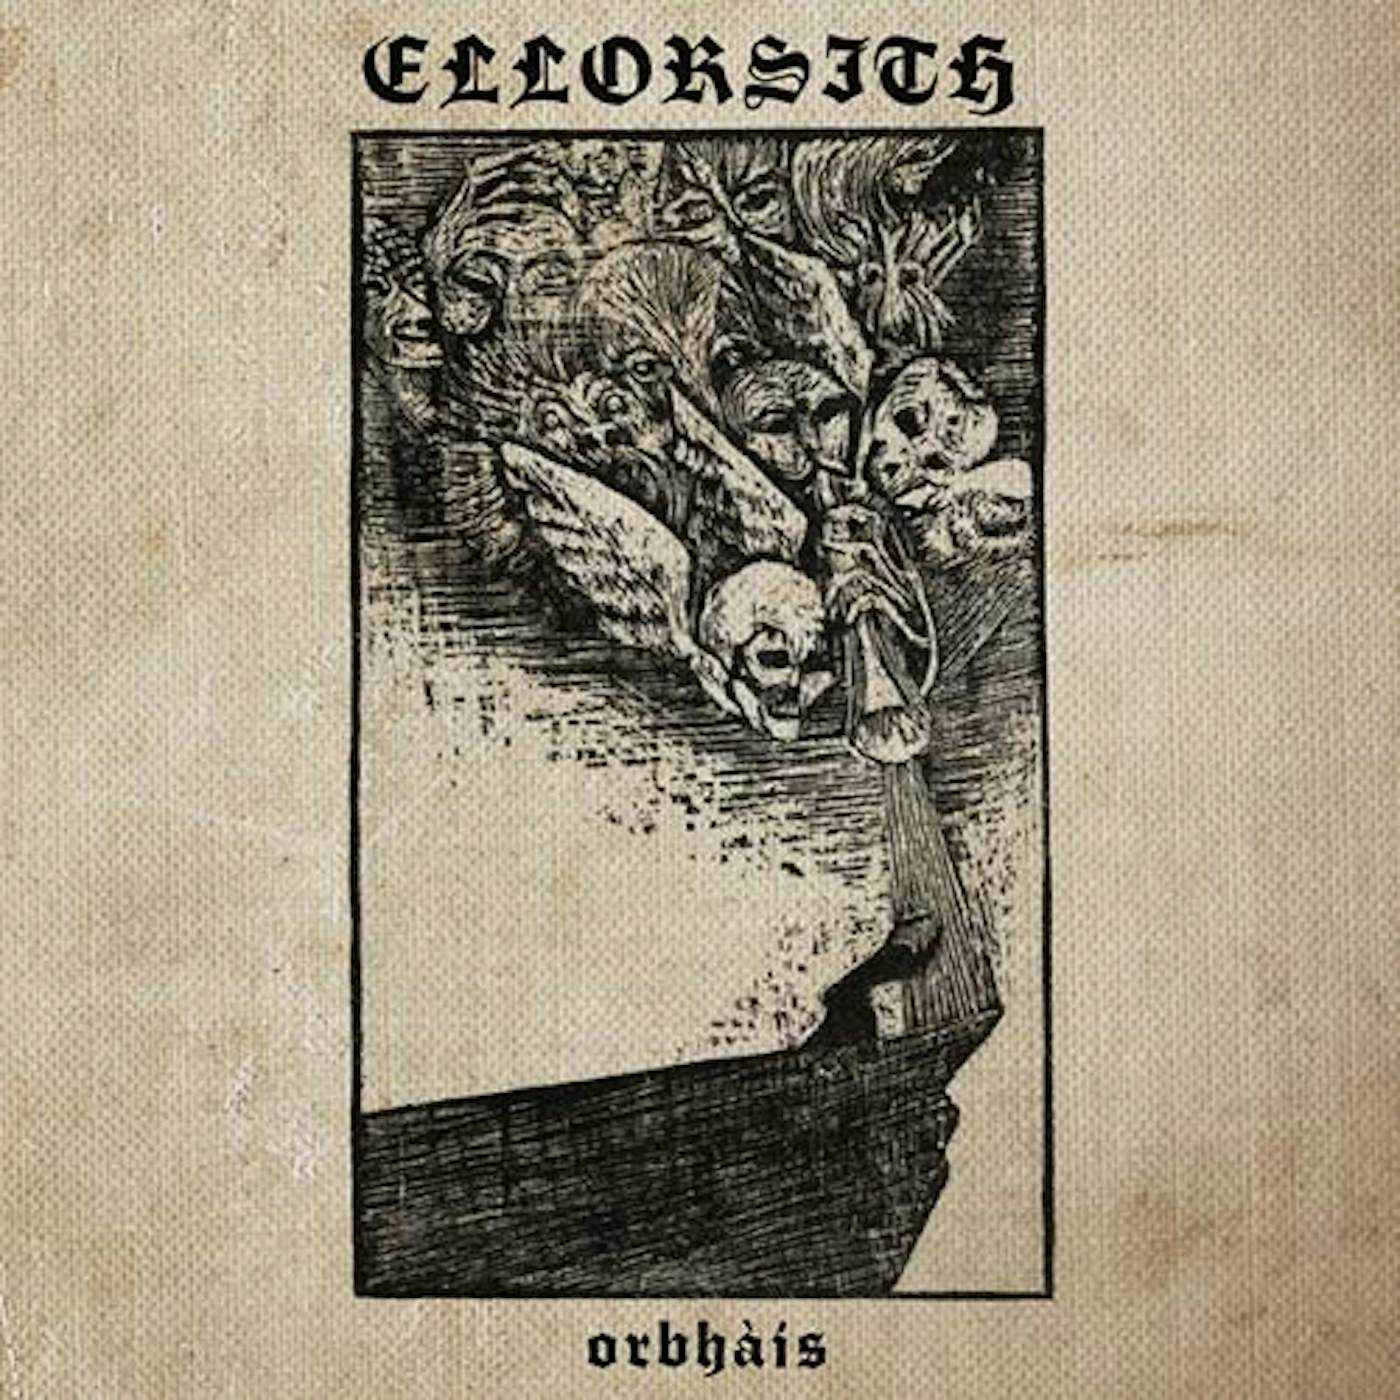 Ellorsith ORBHAIS Vinyl Record